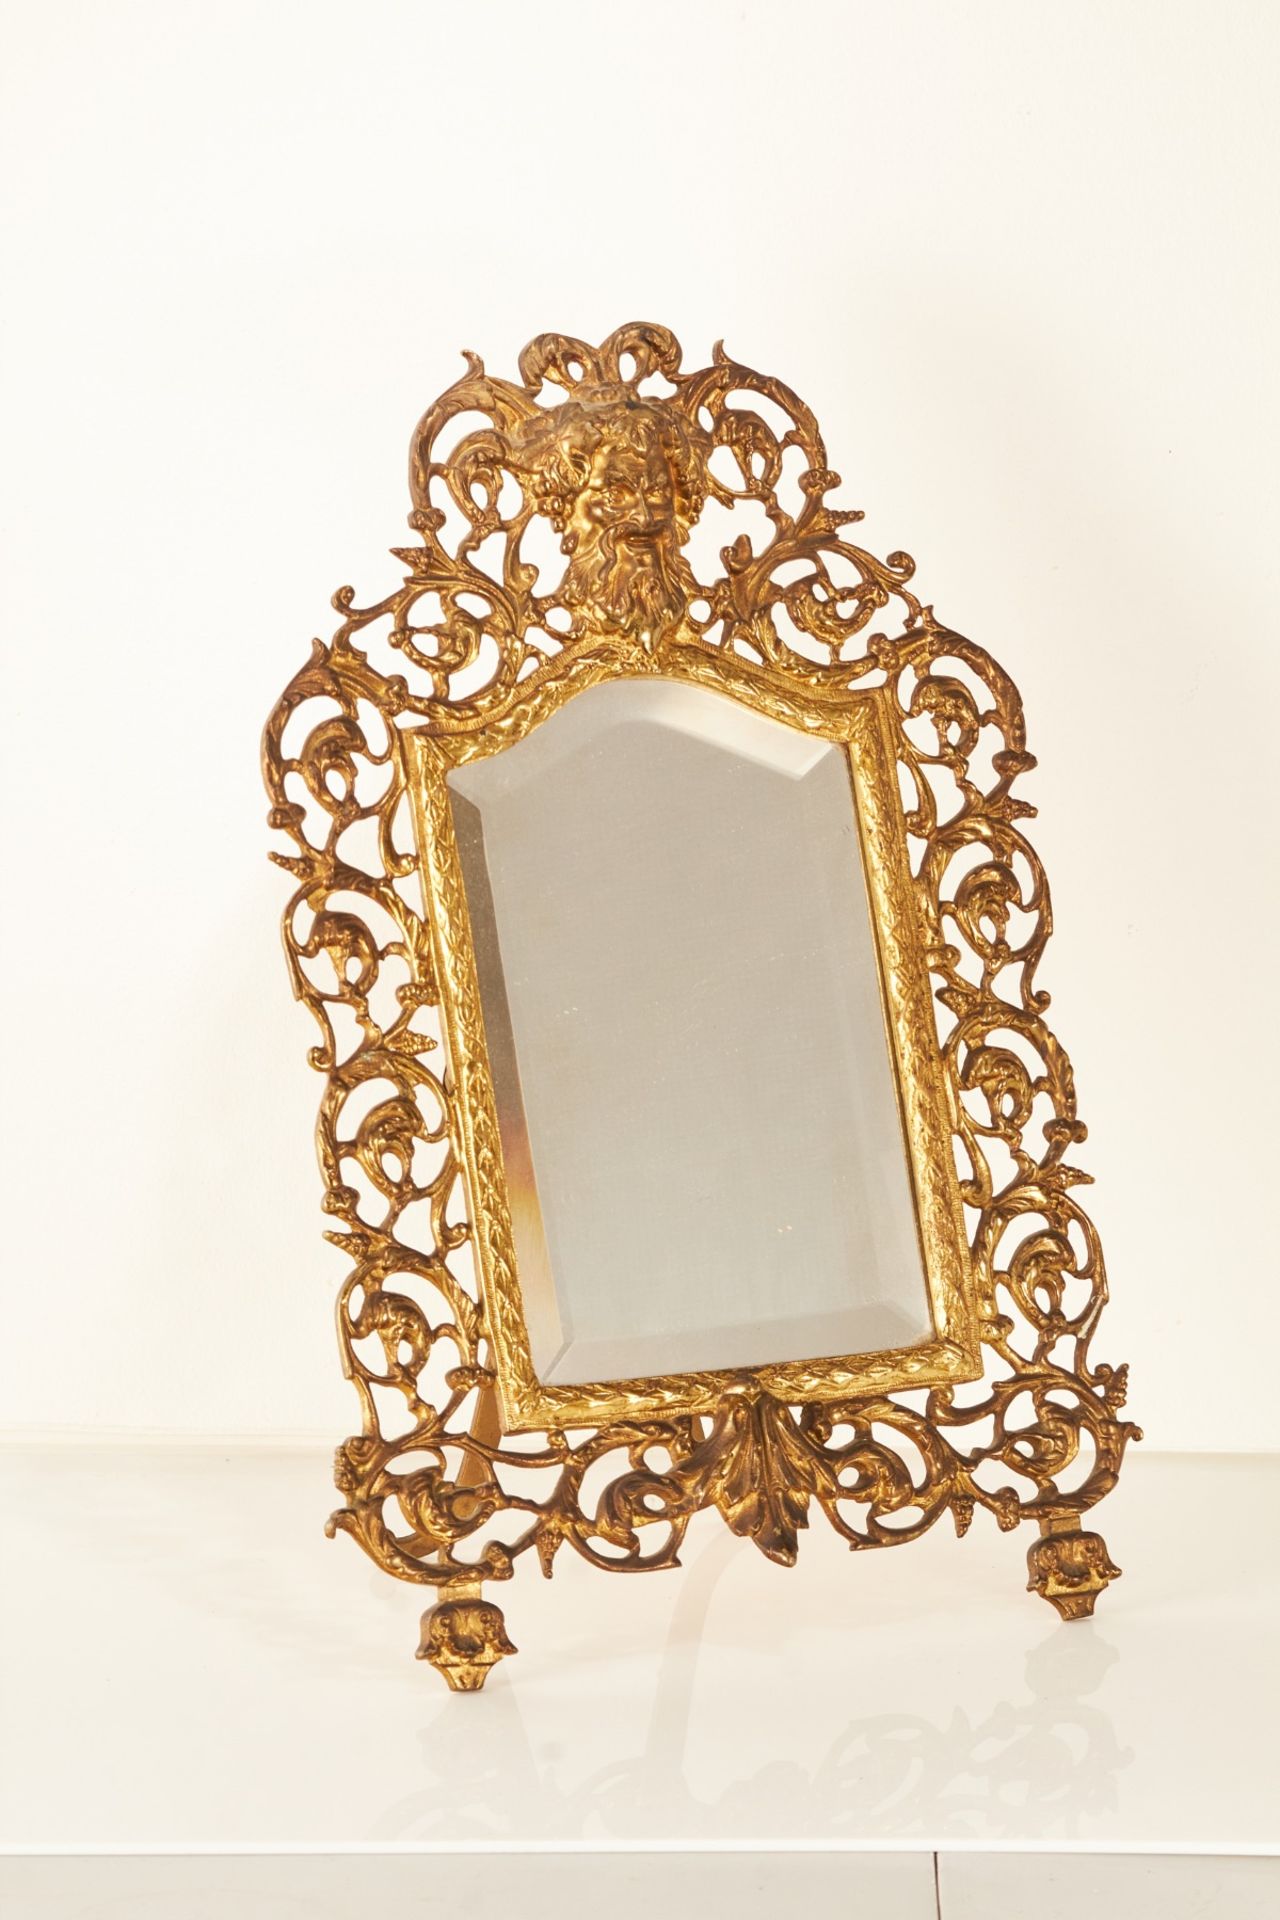 A 20th century gilt brass easel frame mirror